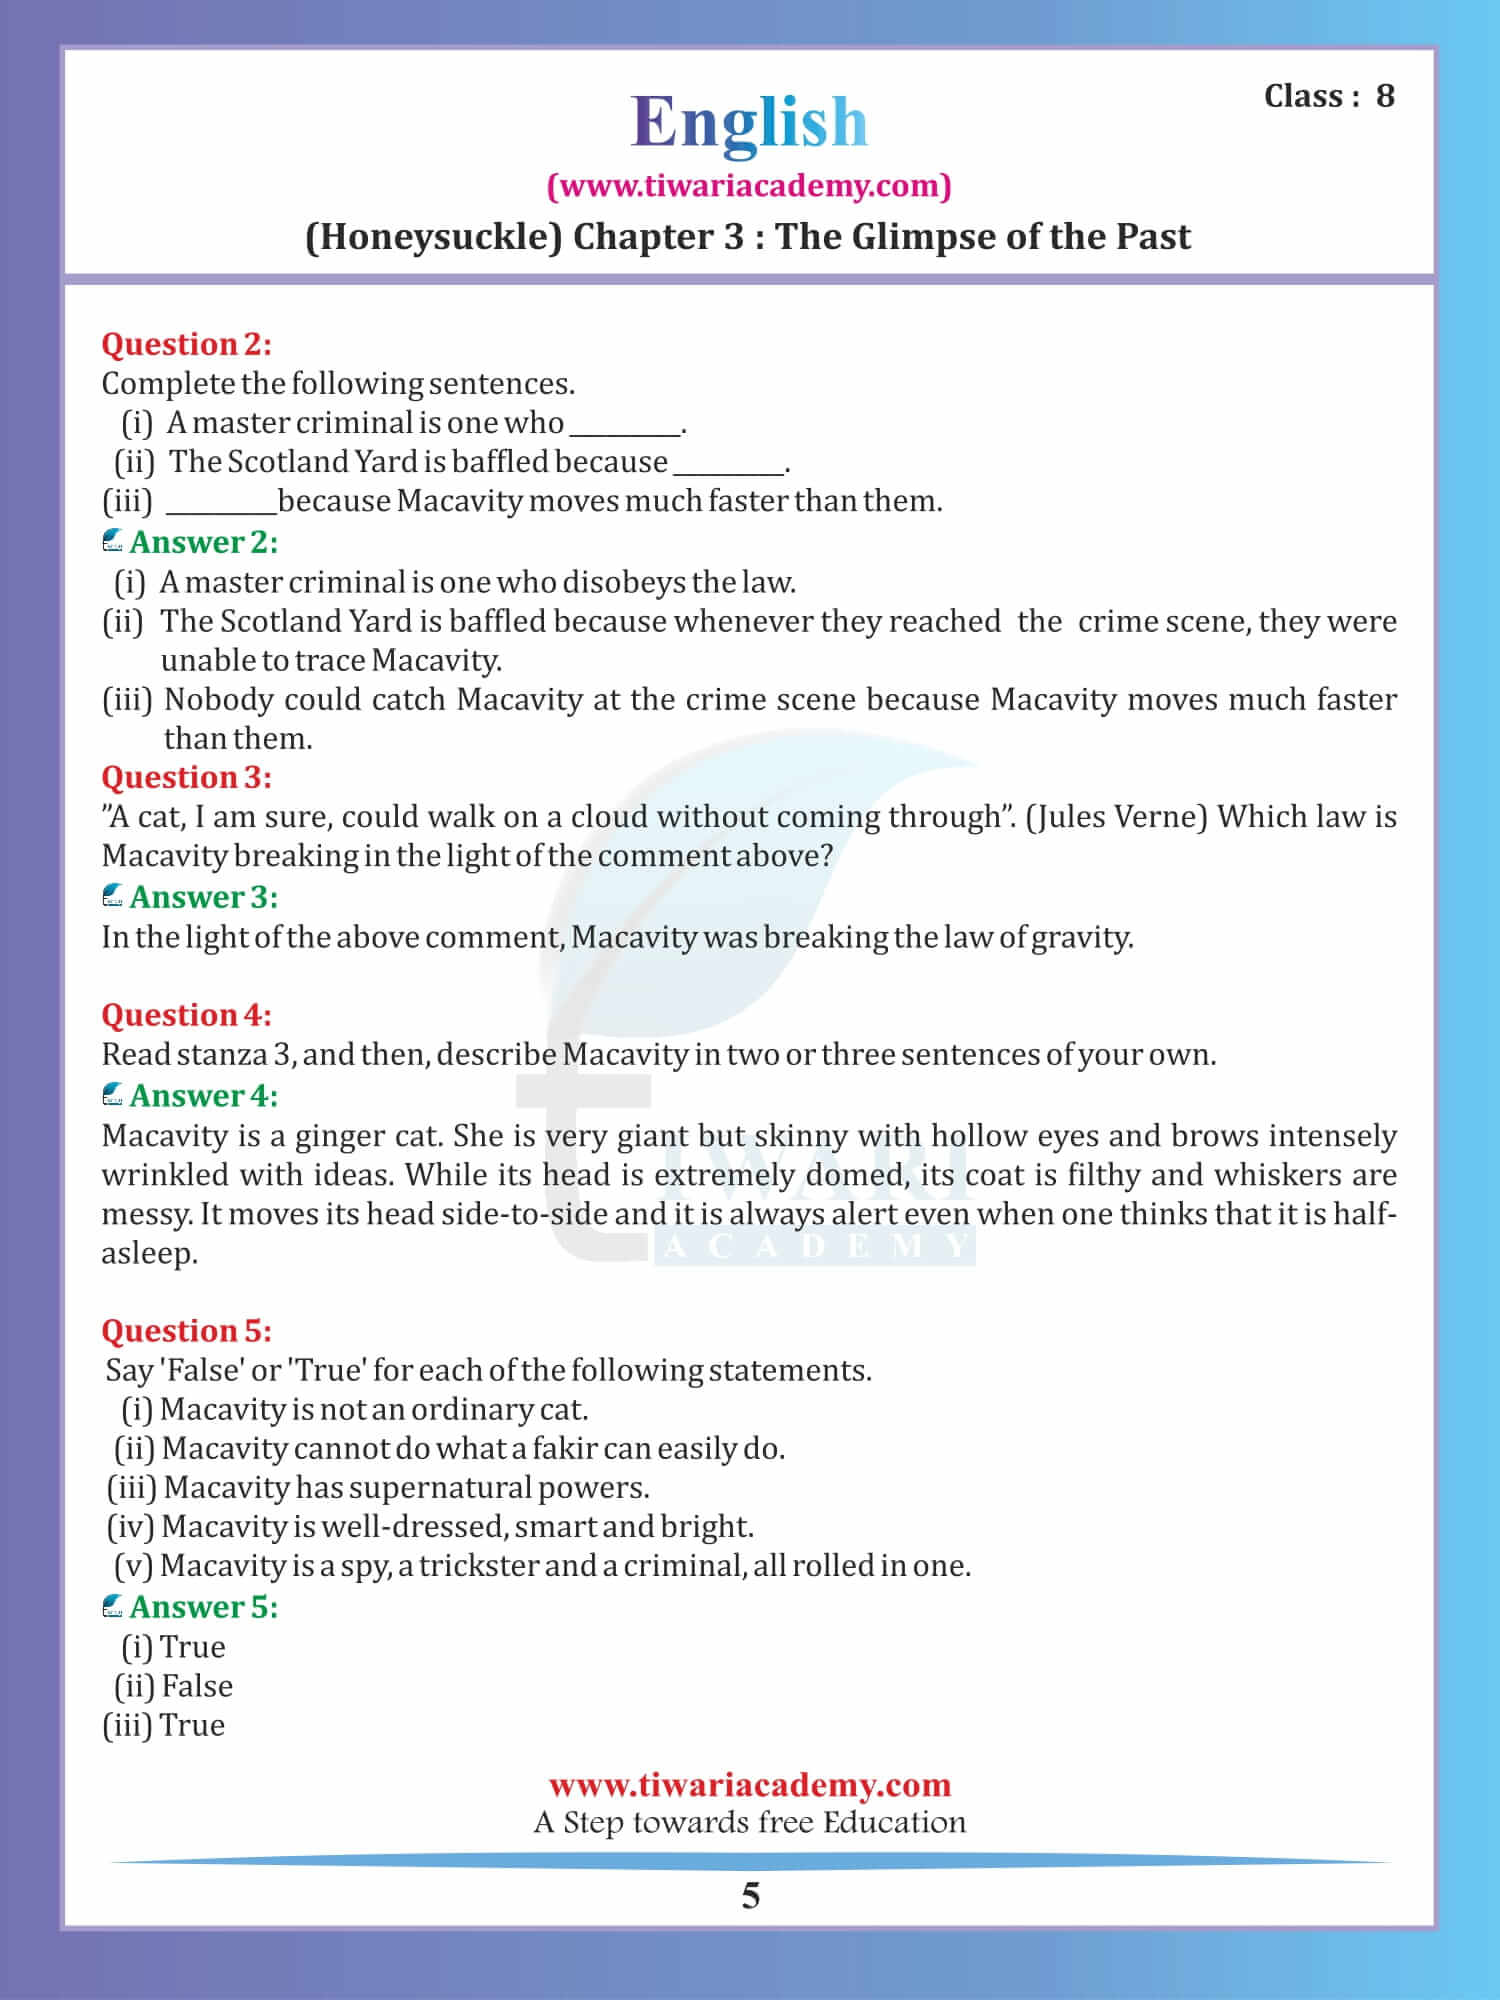 Class 8 English Honeydew Chapter 3 pdf